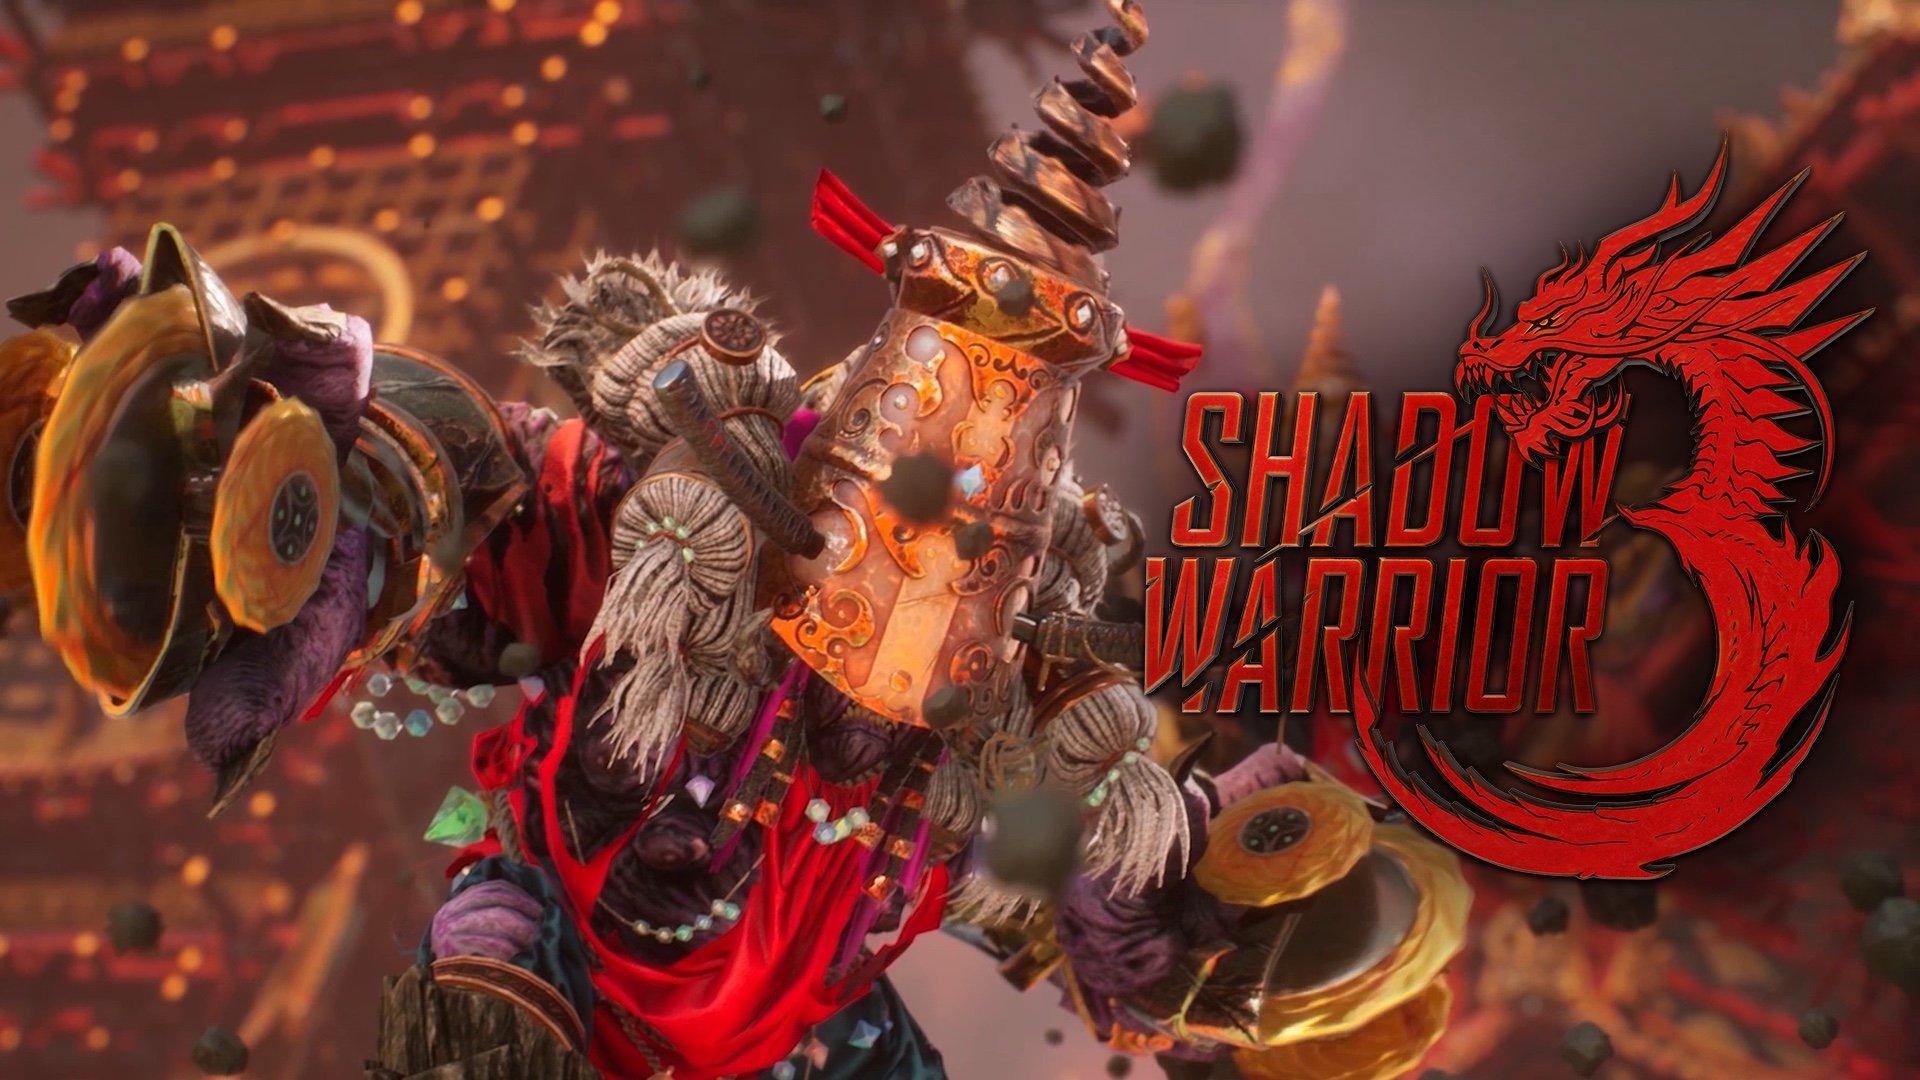 PS4 Shadow Warrior 3 Definitive Edition 